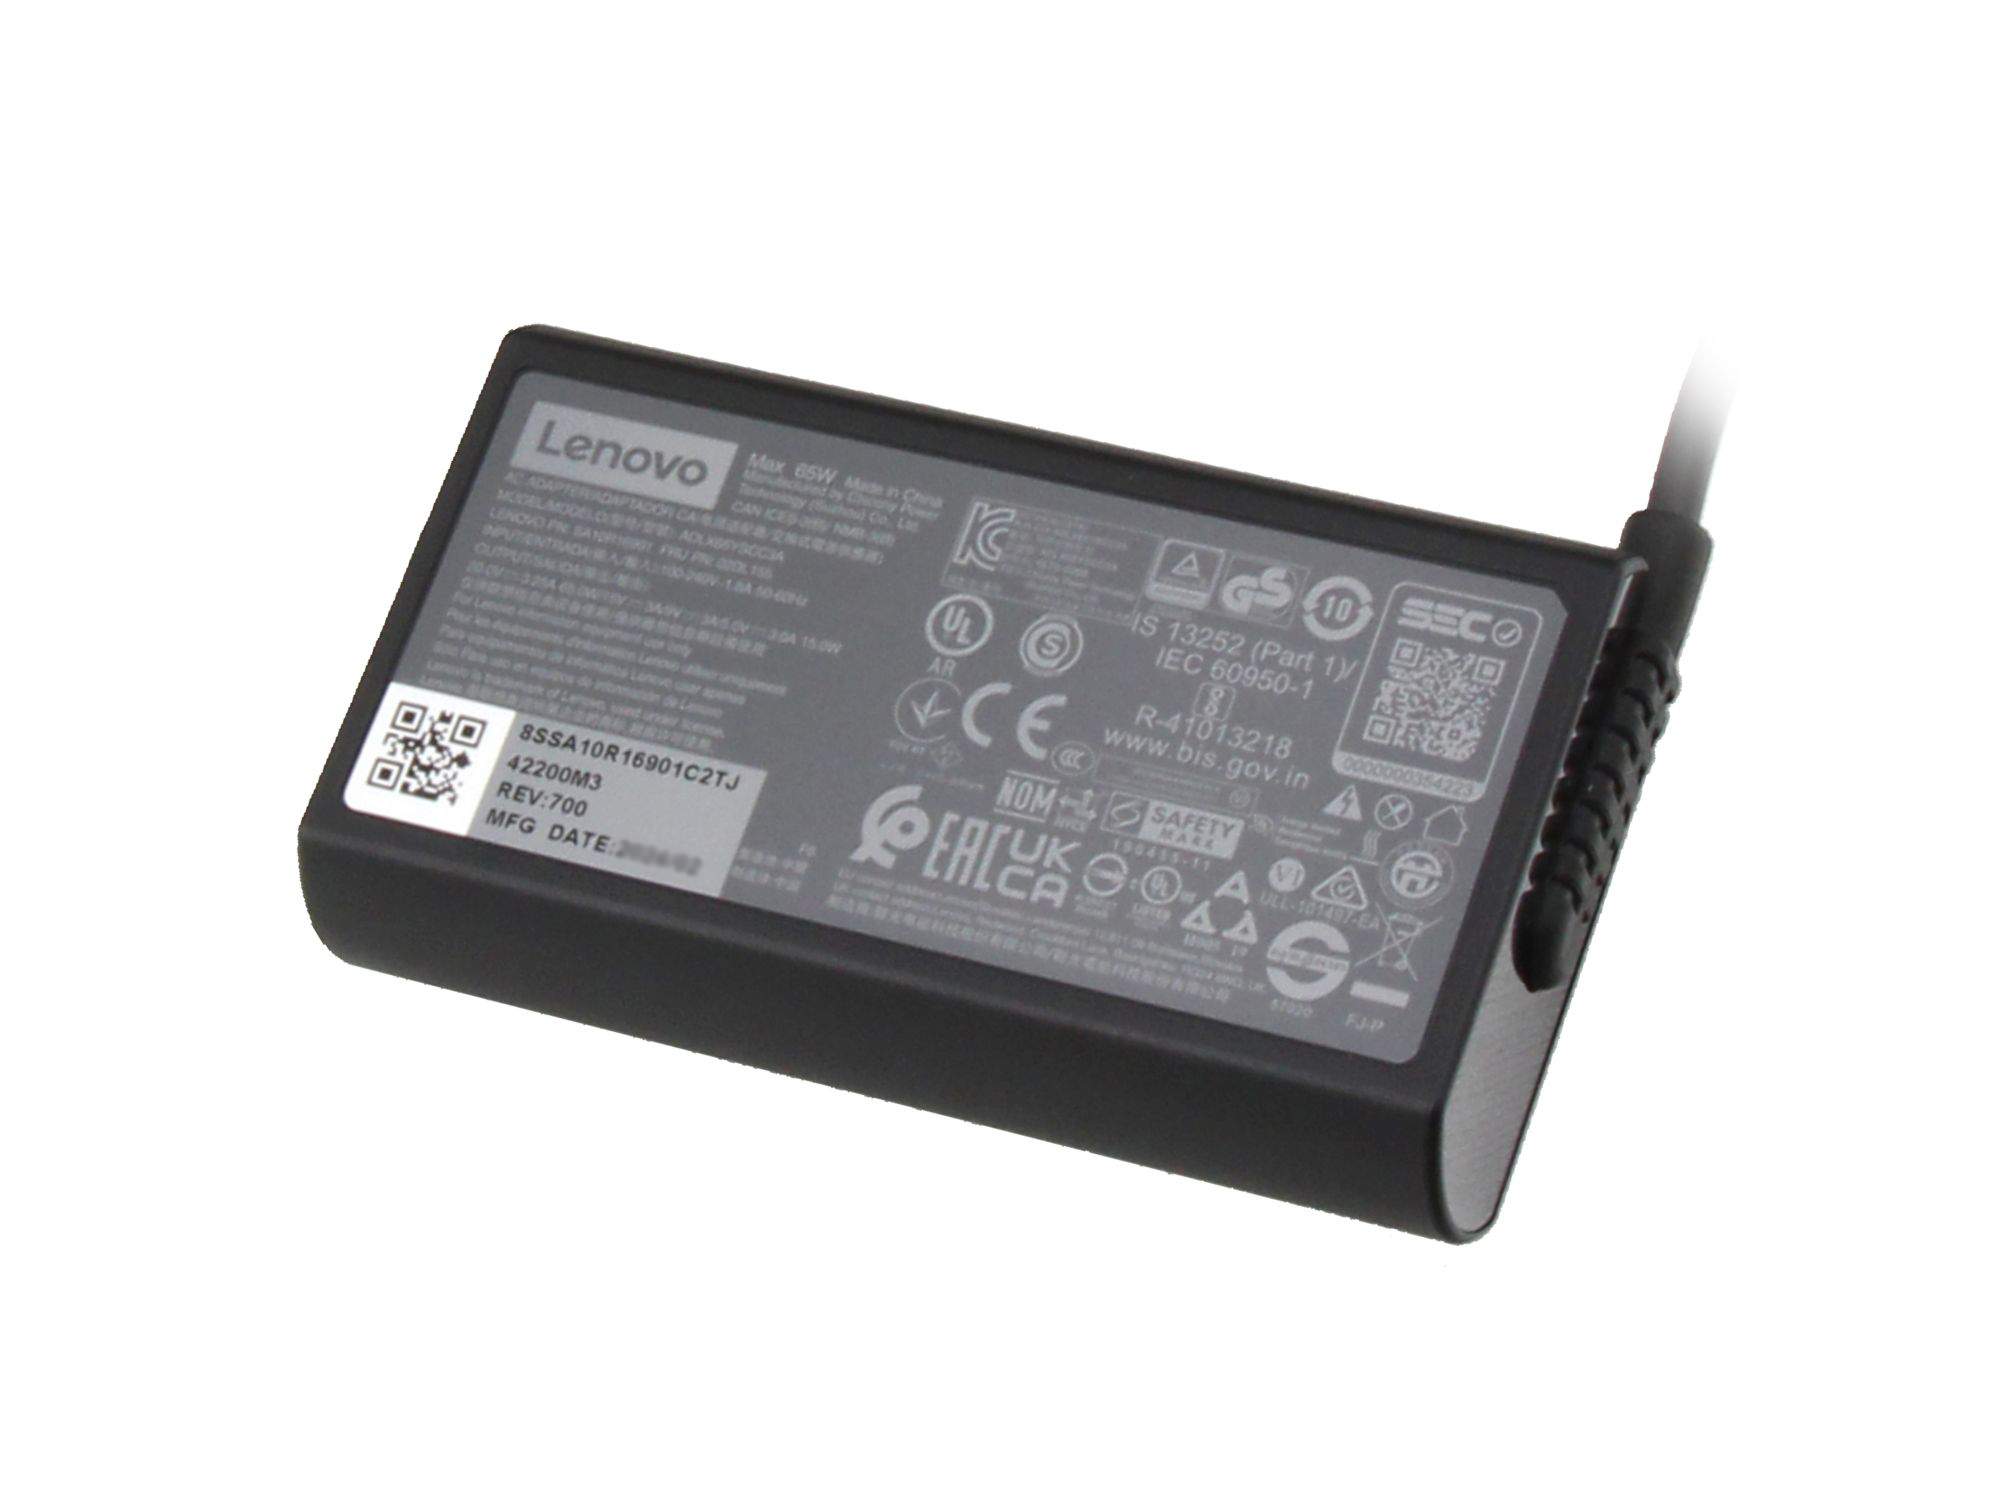 LENOVO ThinkPad 65W Slim AC Adapter (USB Type-C) -Â Â EU/INA/VIE/ROK